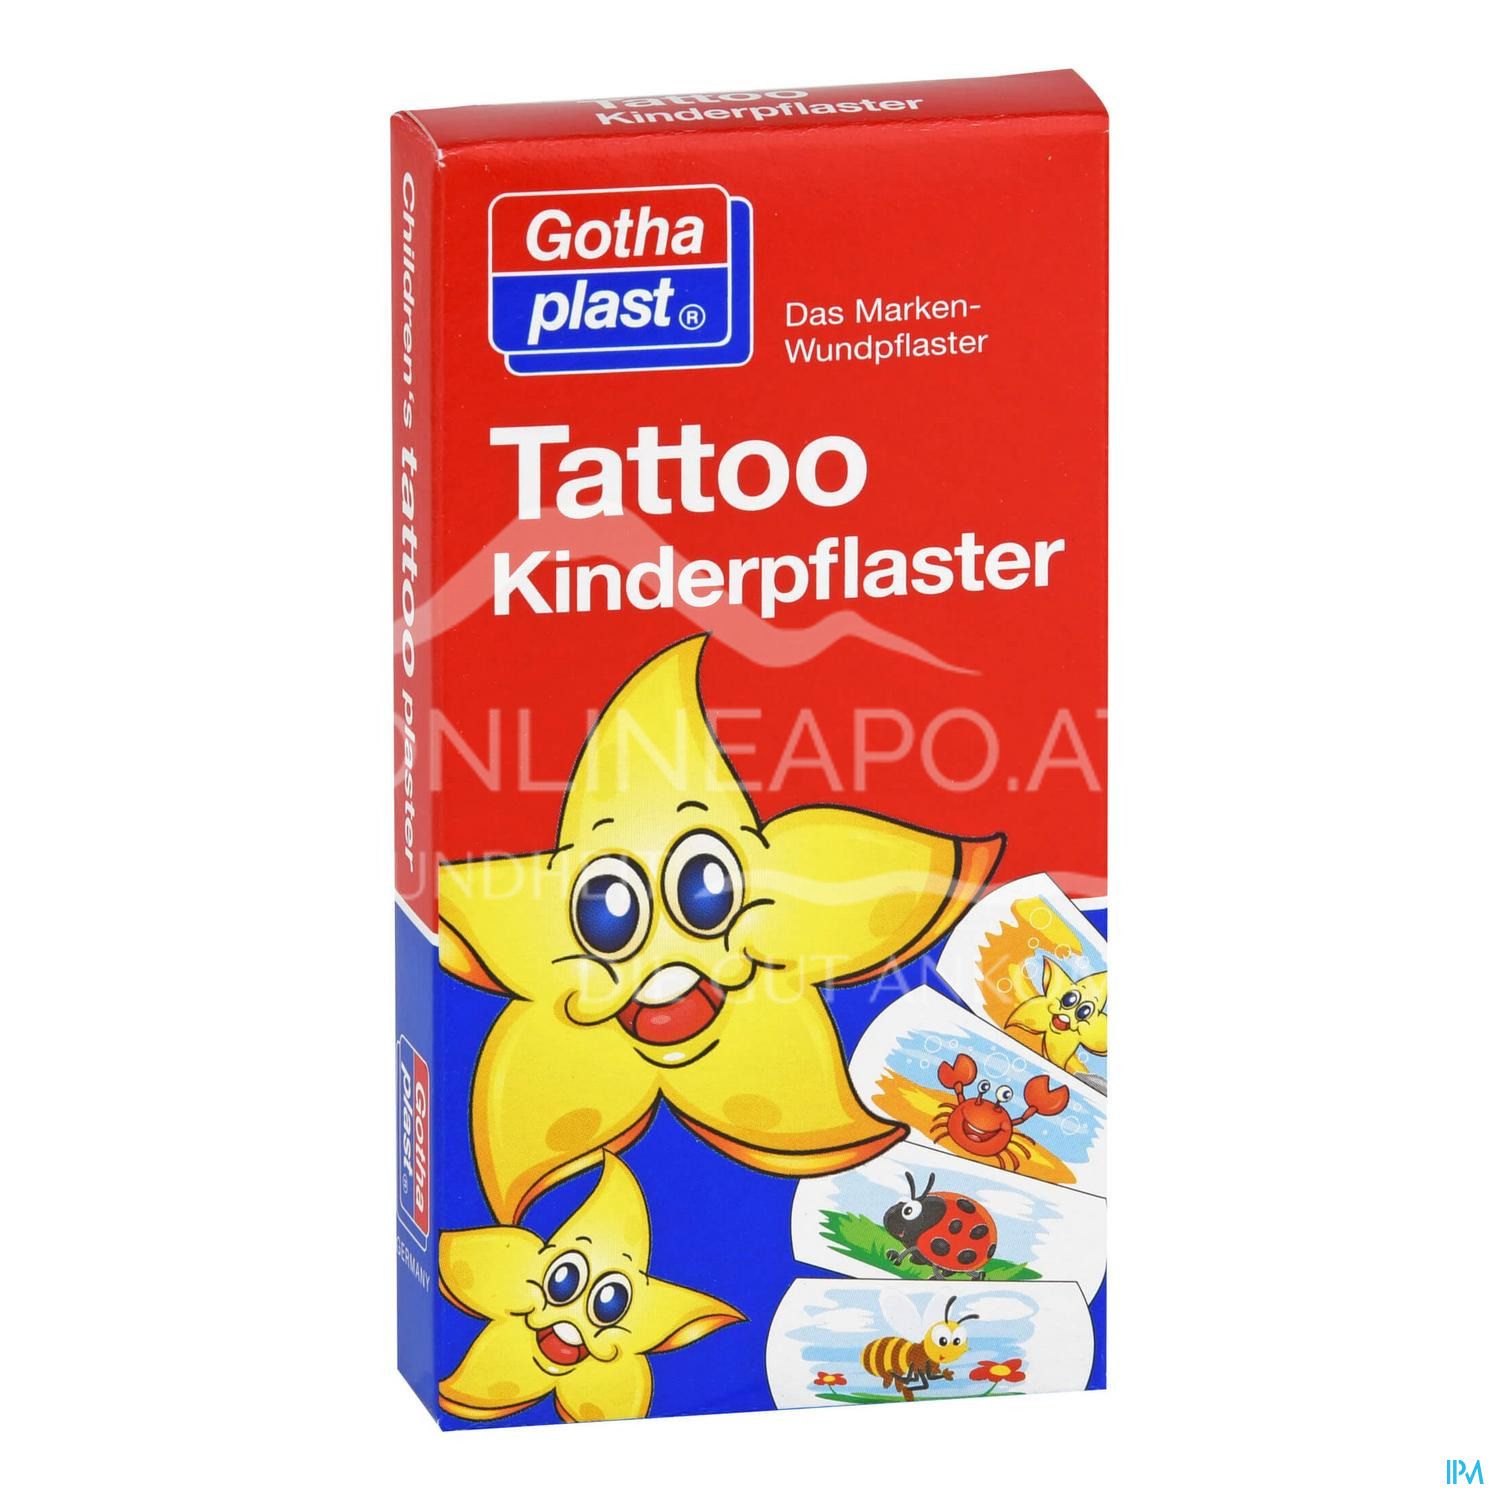 Gothaplast® Tattoo Kinderpflaster 2,5 x 5,7 cm